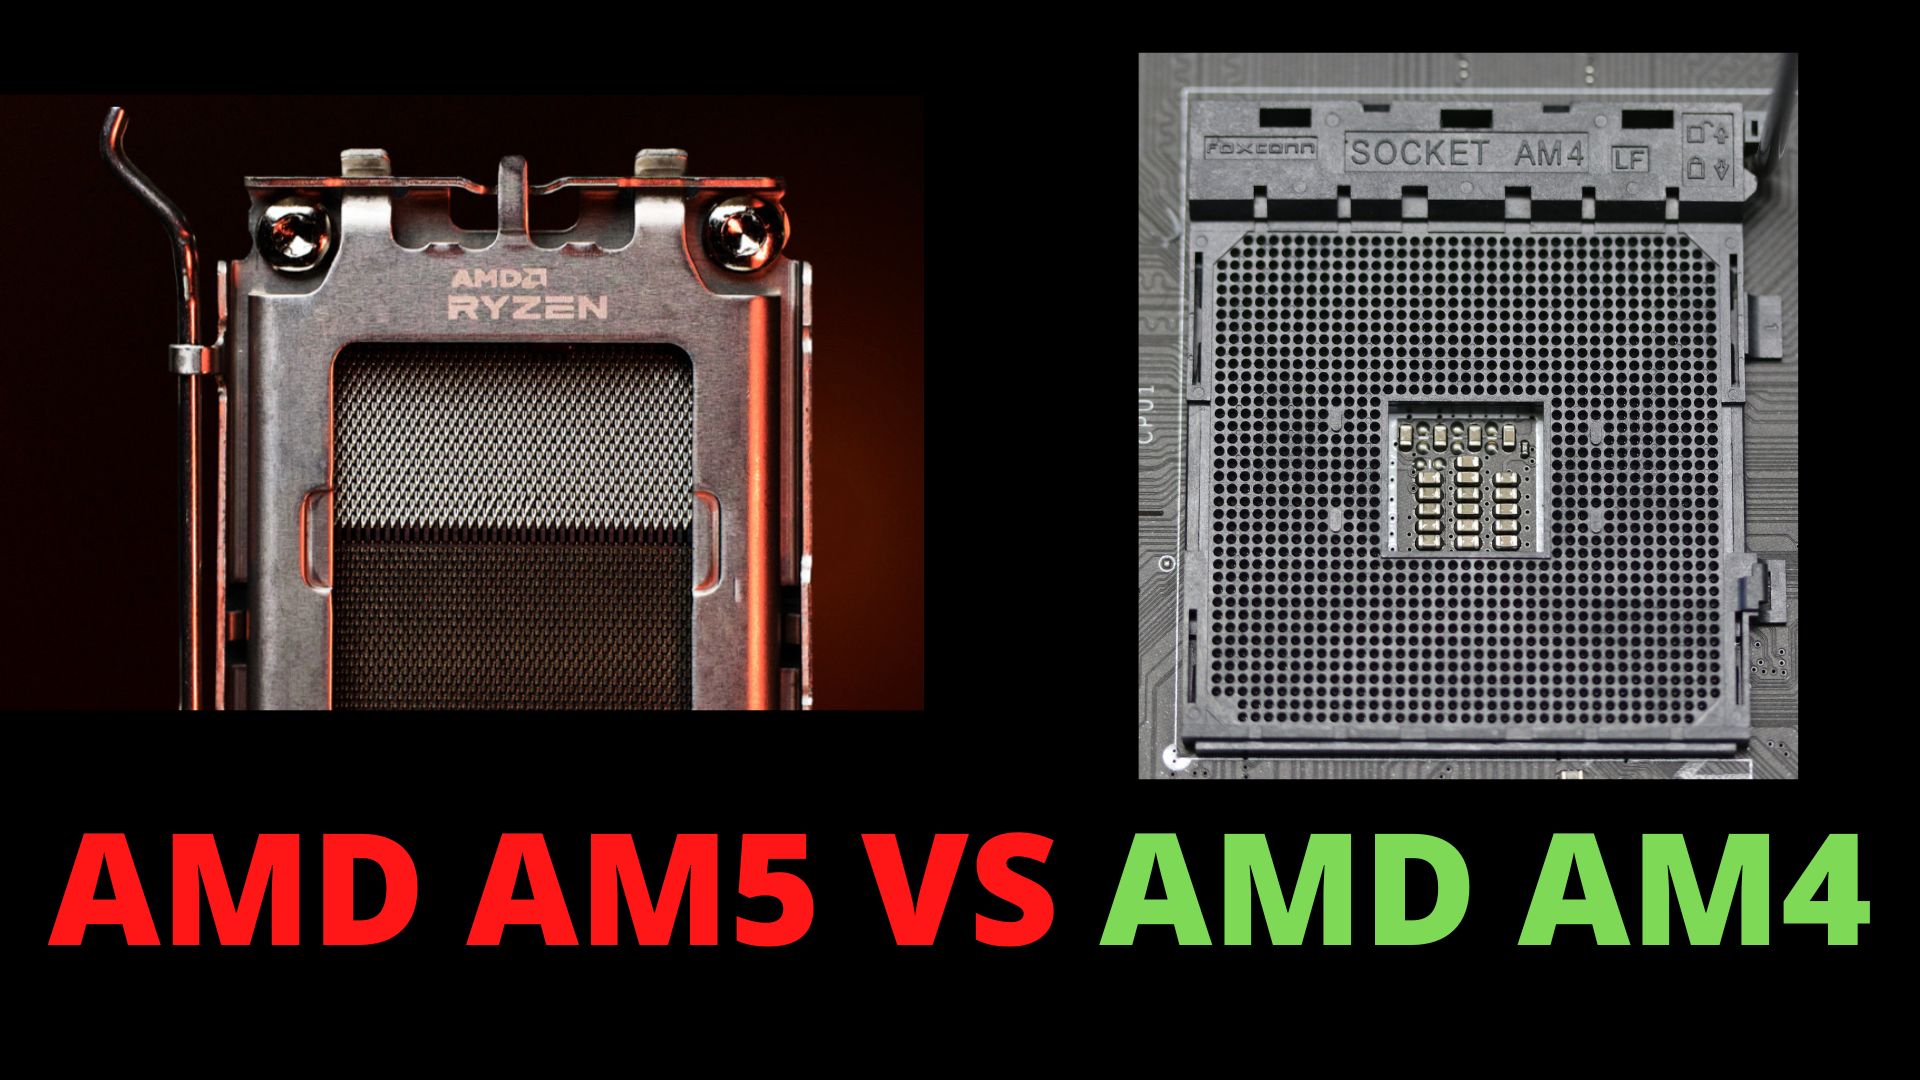 AMD CPU Socket Types - AMD Processor Socket Compatibility